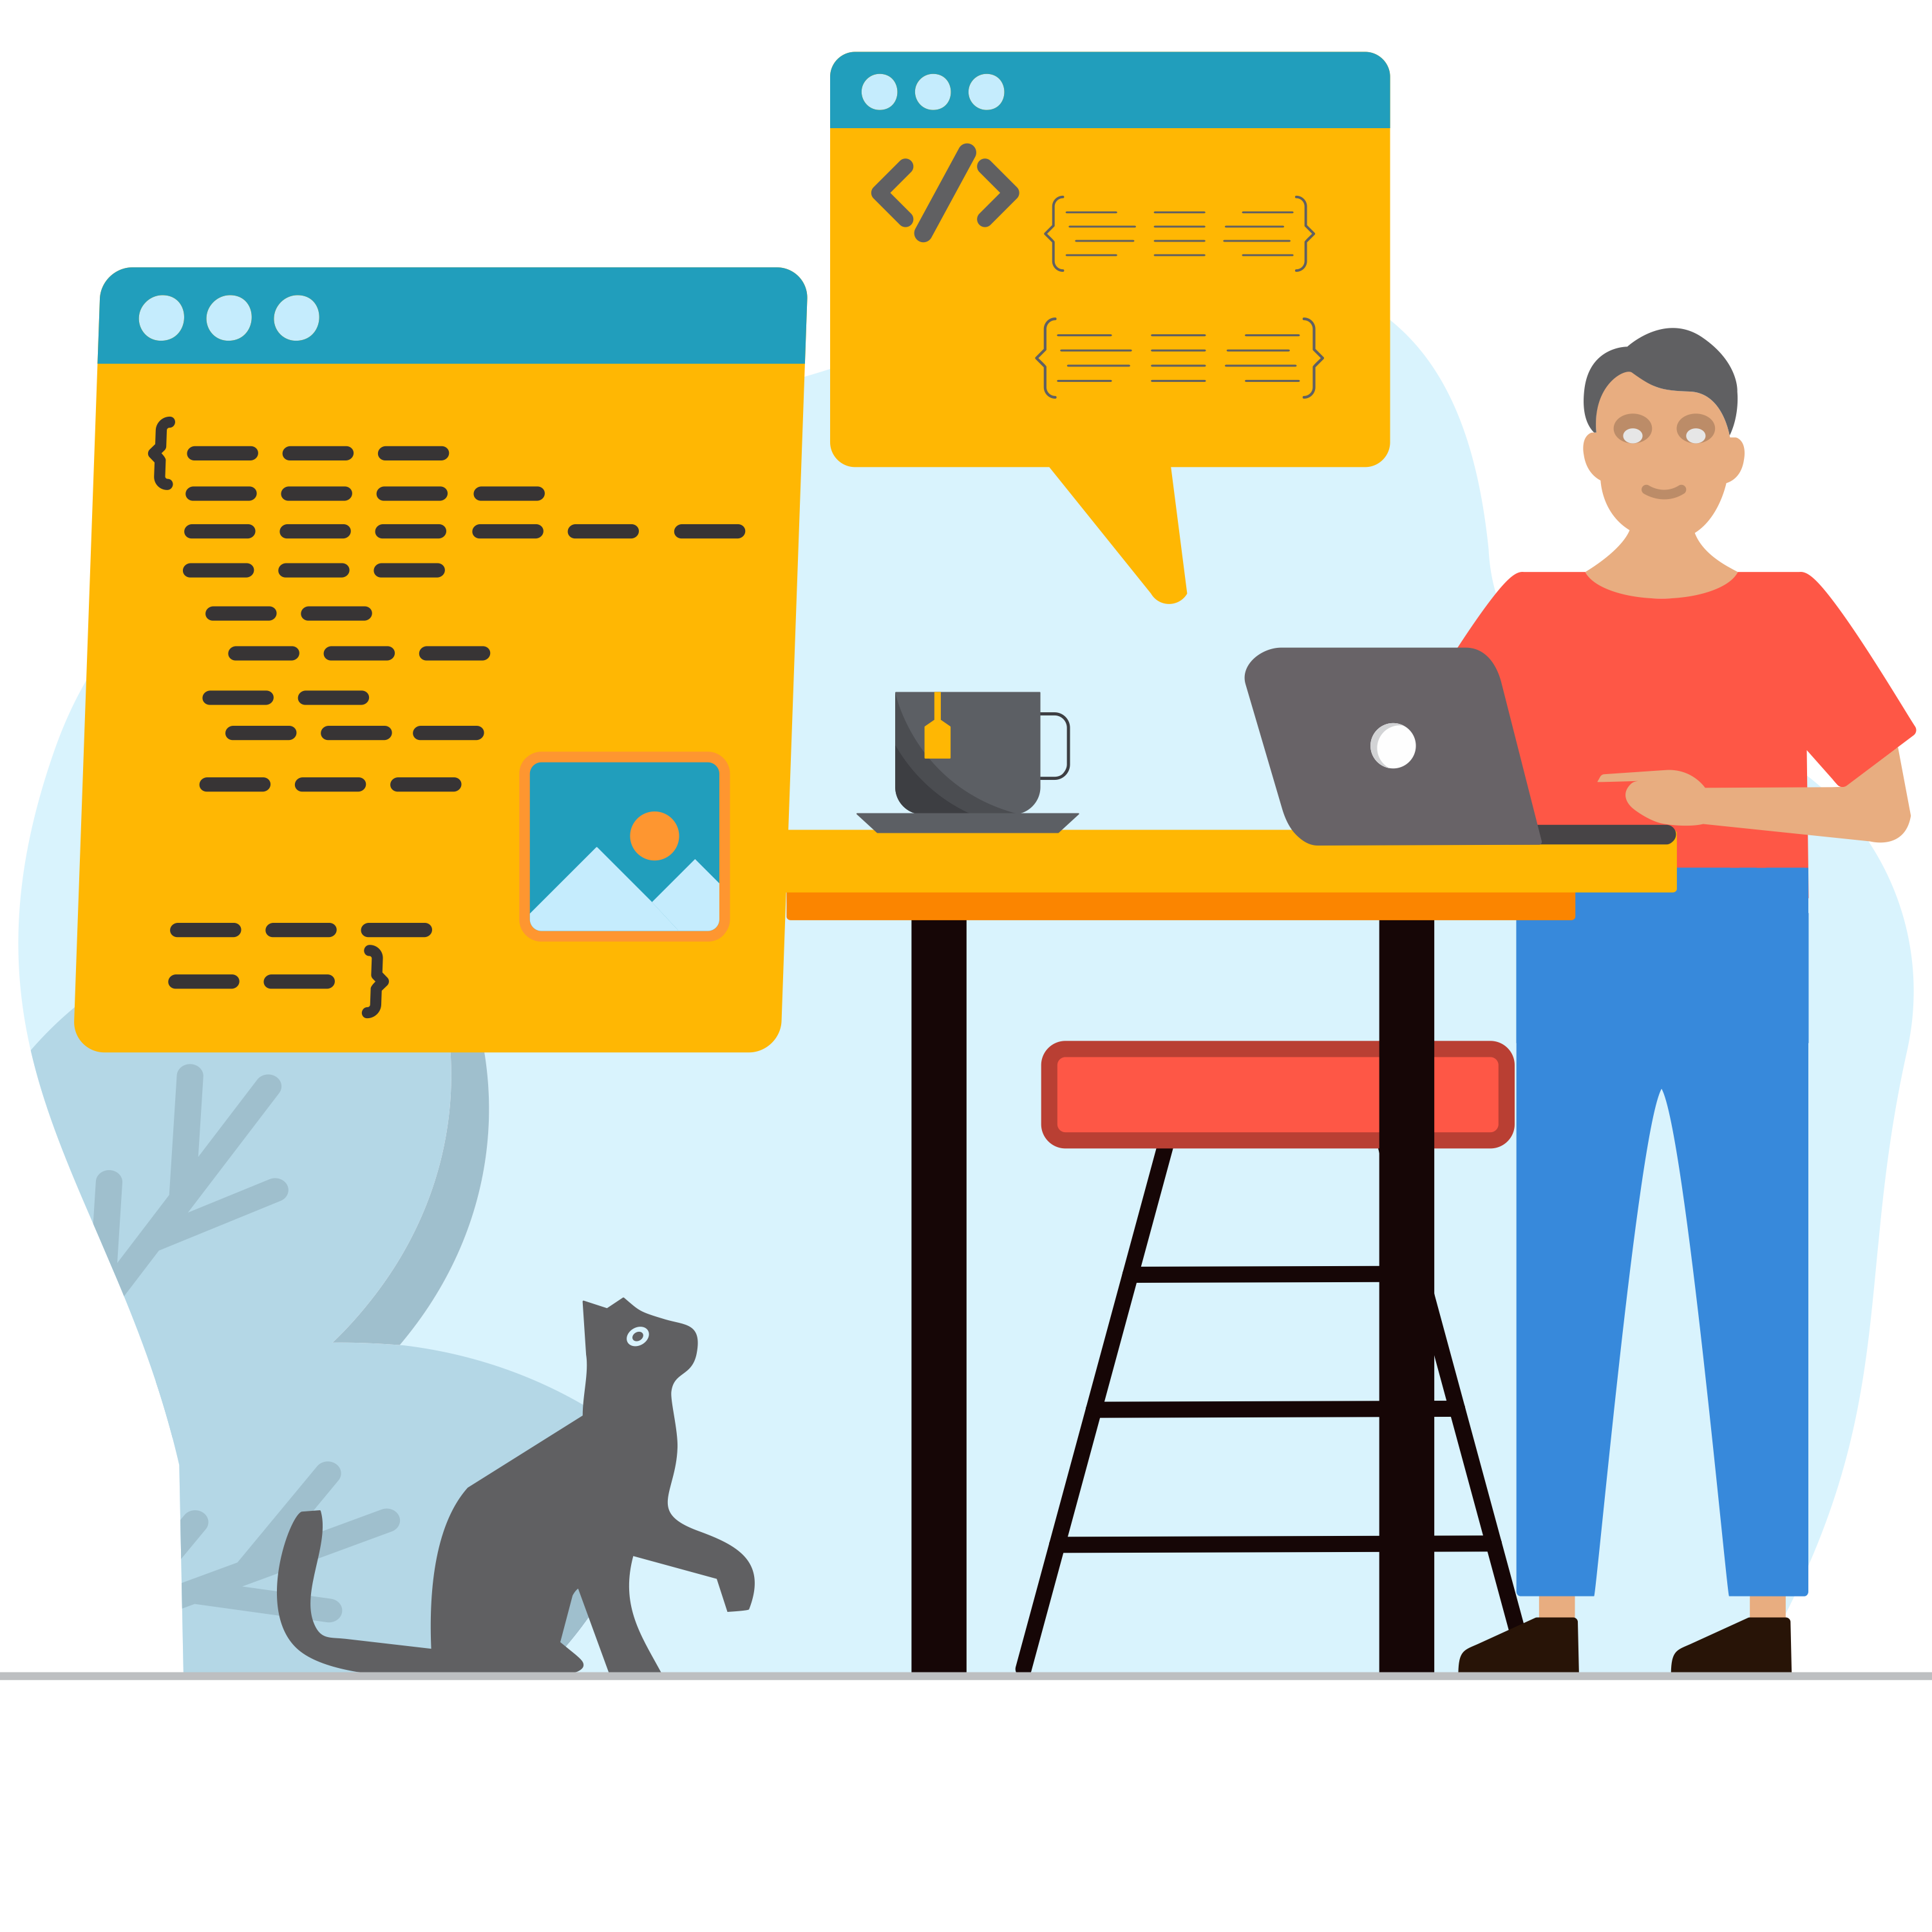 table-laptop-website-photo-coding-tee-stool-cat-man-illustration-developer-illustration